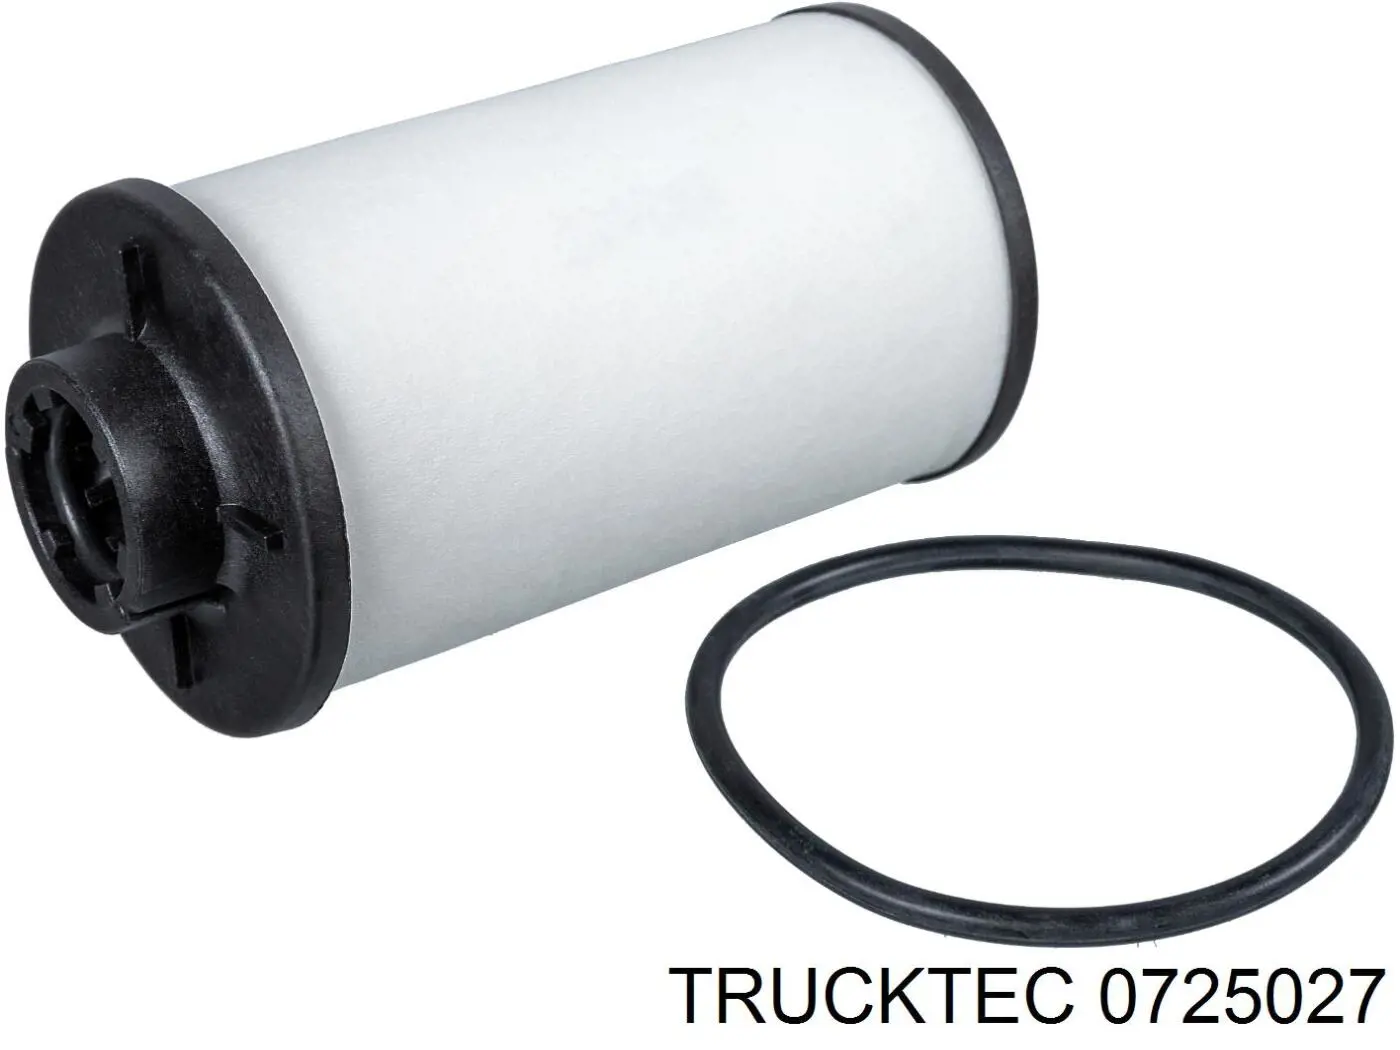 07.25.027 Trucktec filtro de transmisión automática